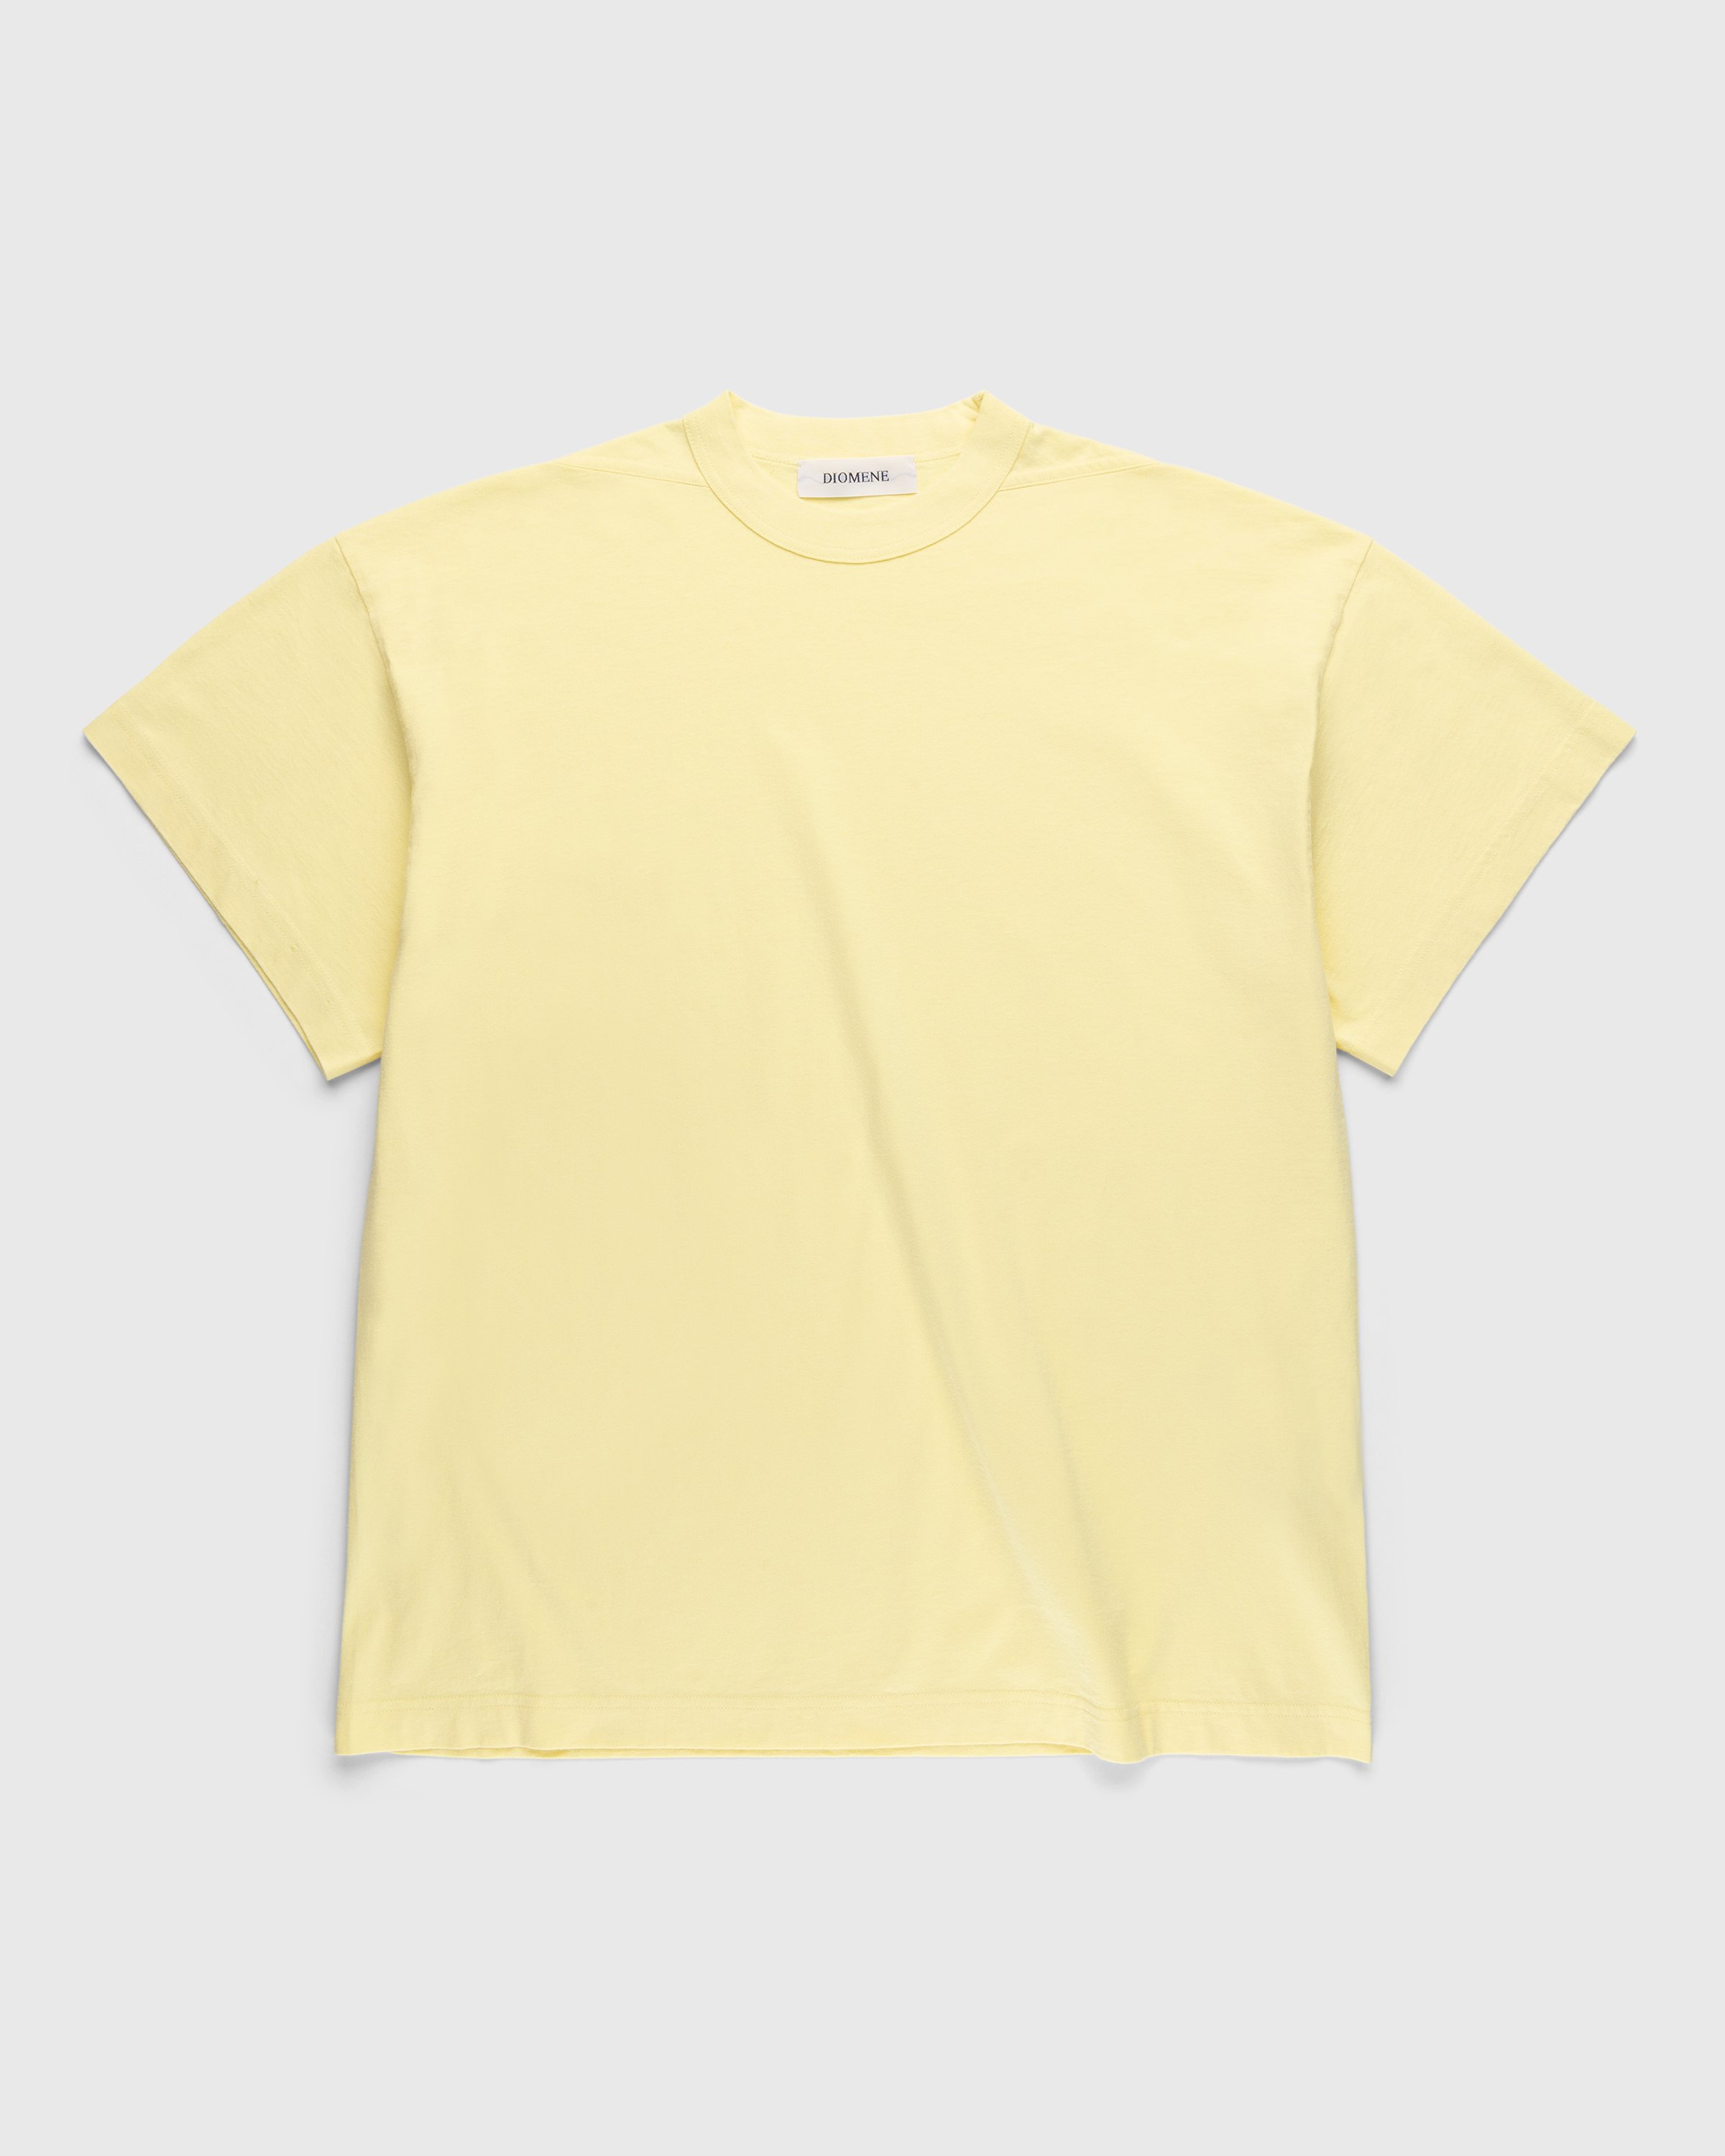 Diomene by Damir Doma - Cotton Crewneck T-Shirt Lemonade - Clothing - Yellow - Image 1